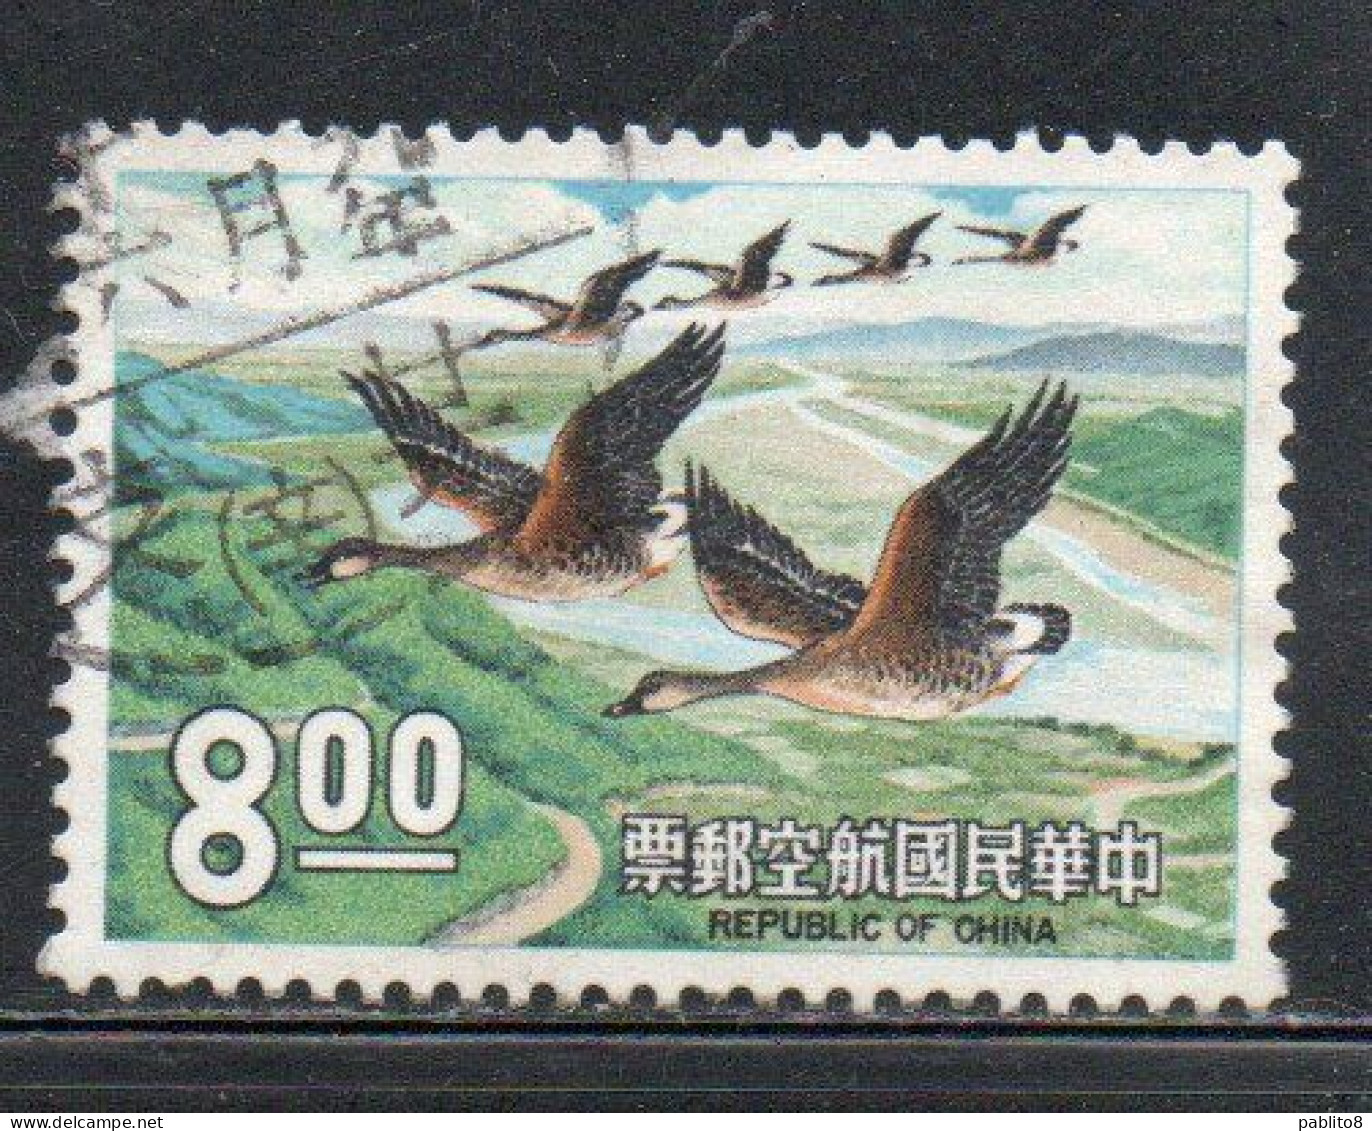 CHINA REPUBLIC CINA TAIWAN FORMOSA 1969 AIR POST MAIL AIRMAIL BIRD FAUNA BIRDS WILD GEESE FLIGT LAND 8$ USED USATO - Luchtpost